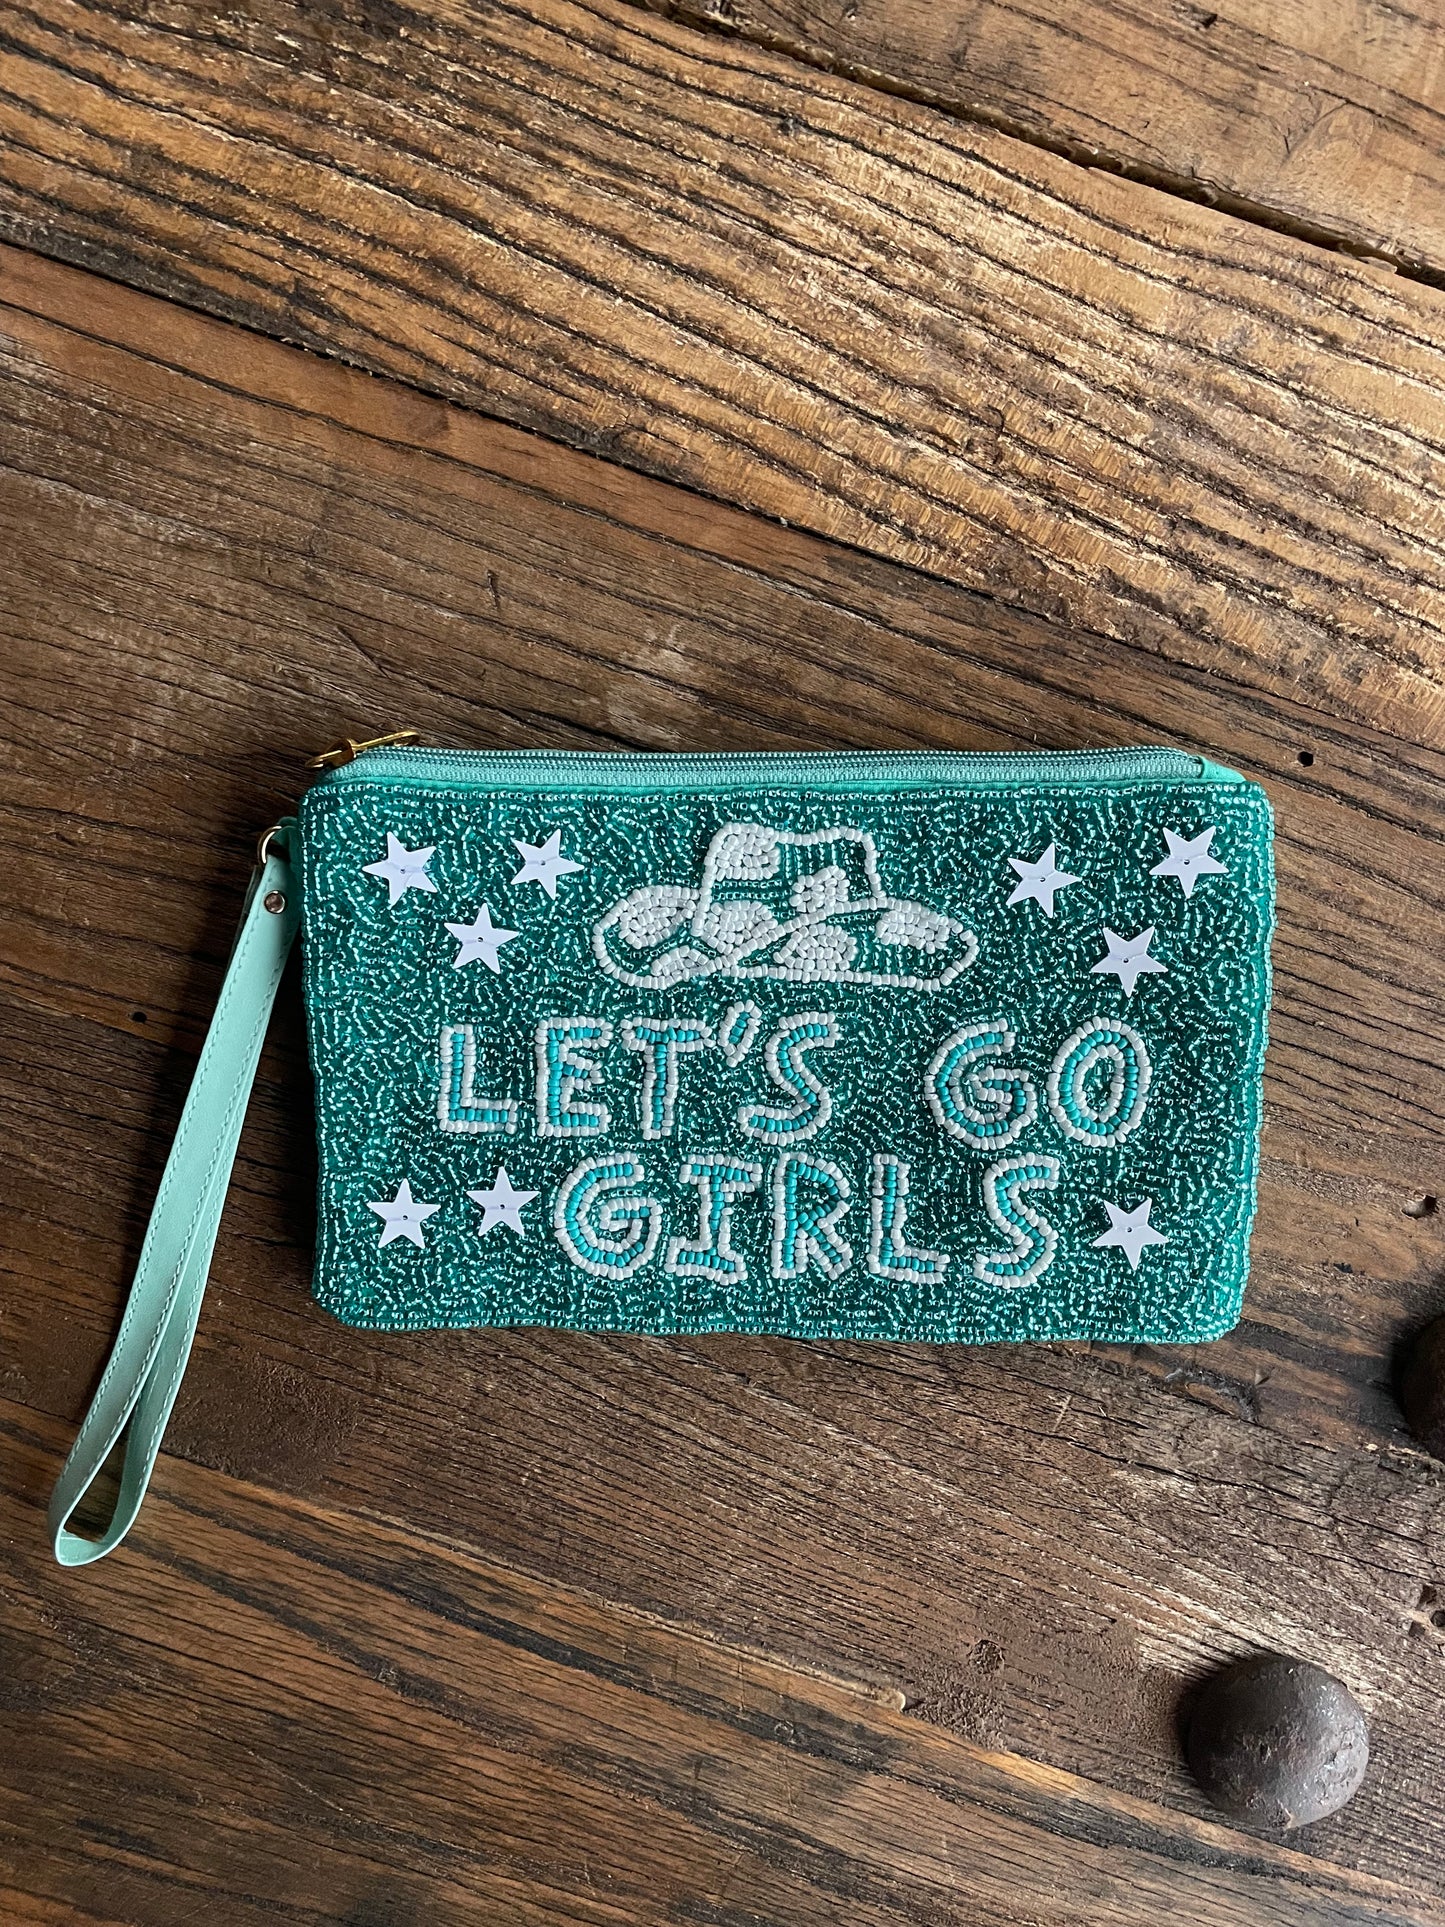 Let’s Go Girls  beaded purse, wallet, makeup bag